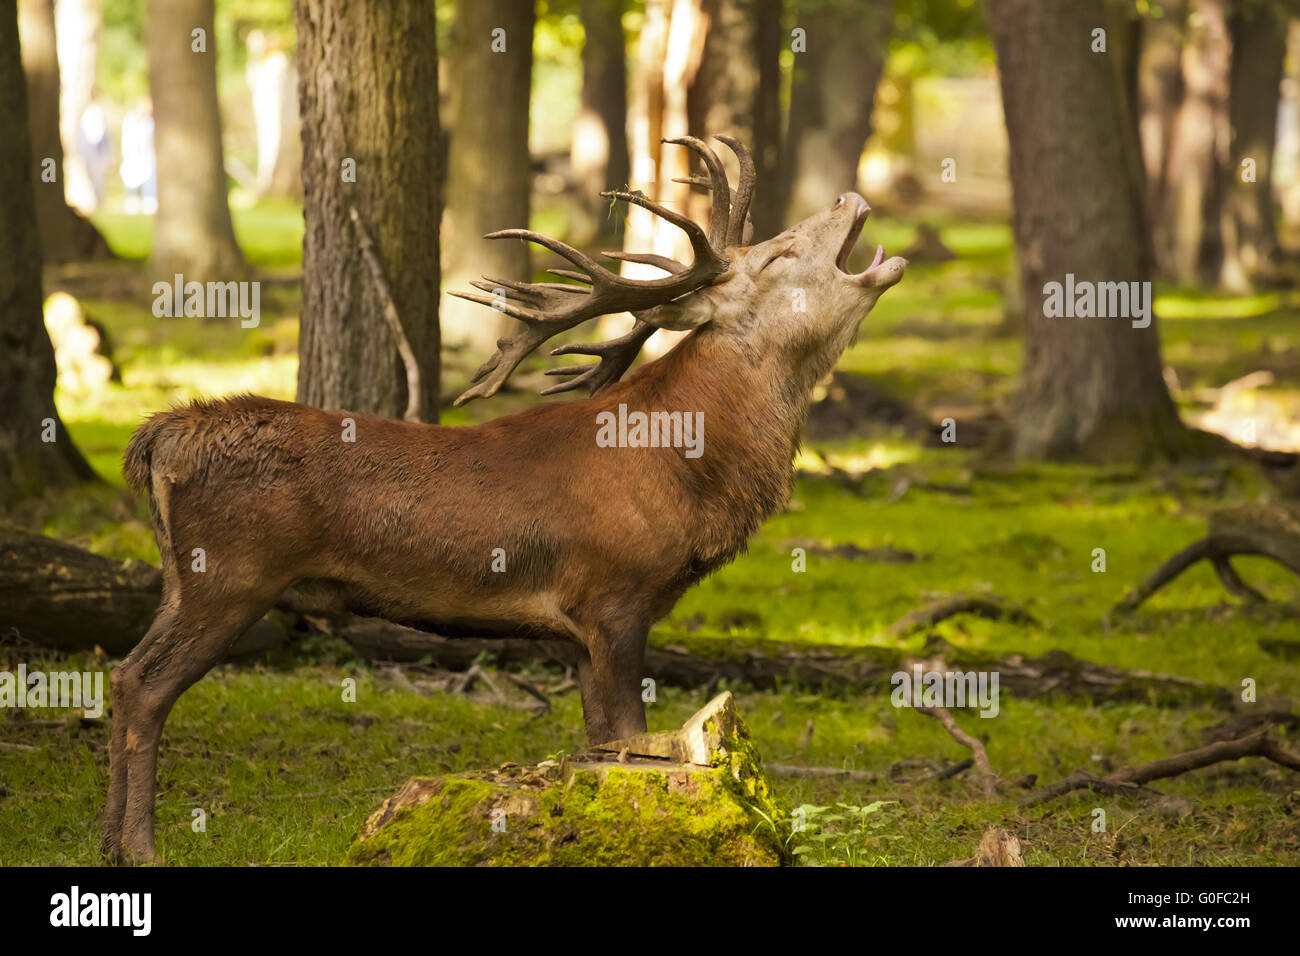 Red deer / Cervus elaphus bellowing in the forest Stock Photo